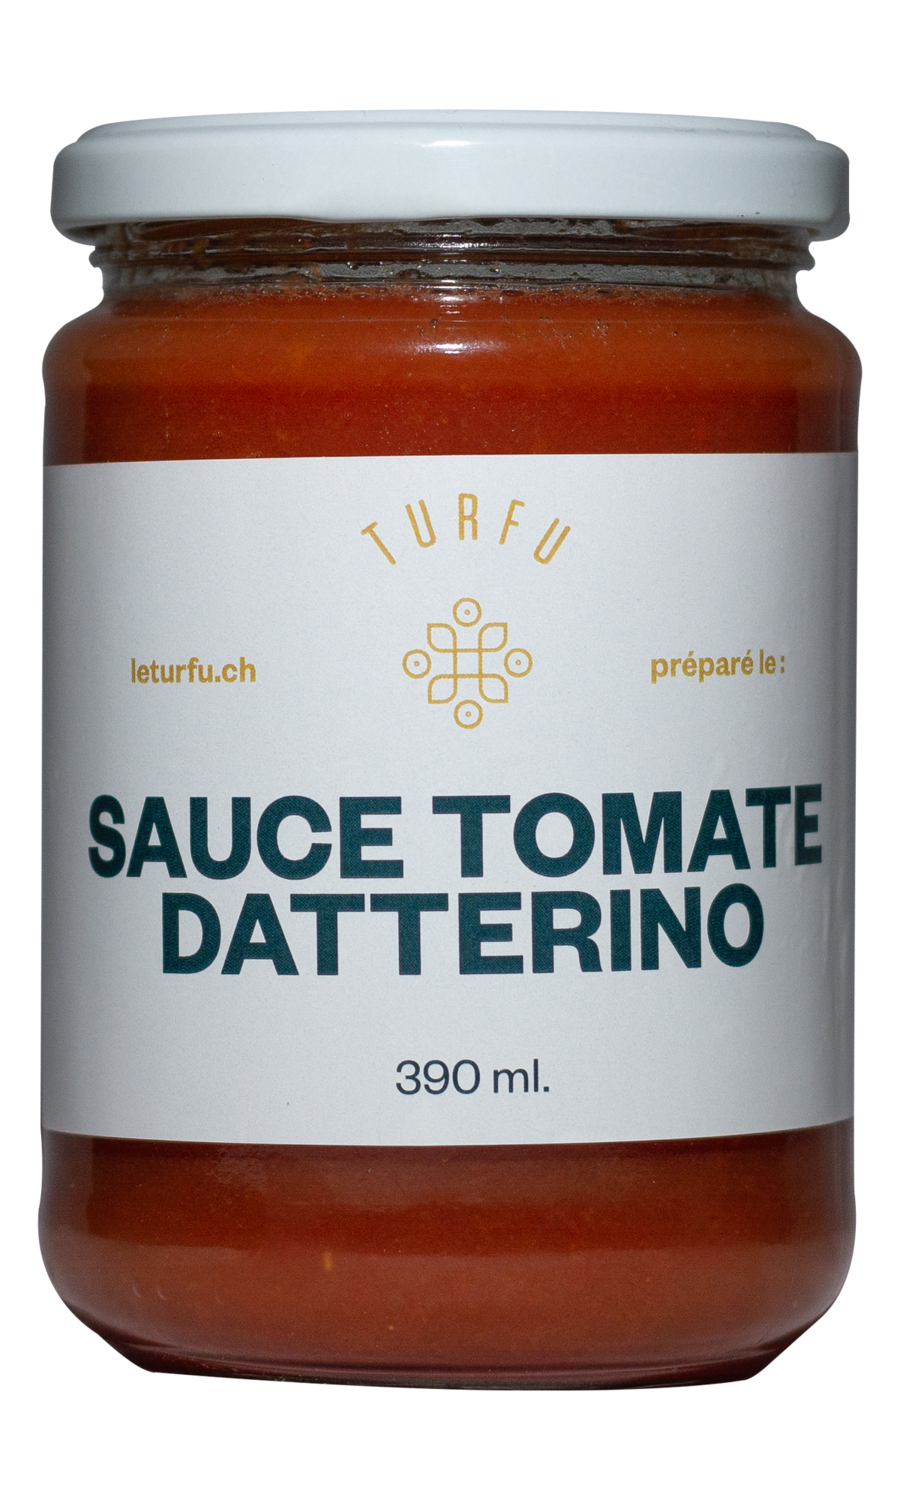 Sauce tomate "Datterino"